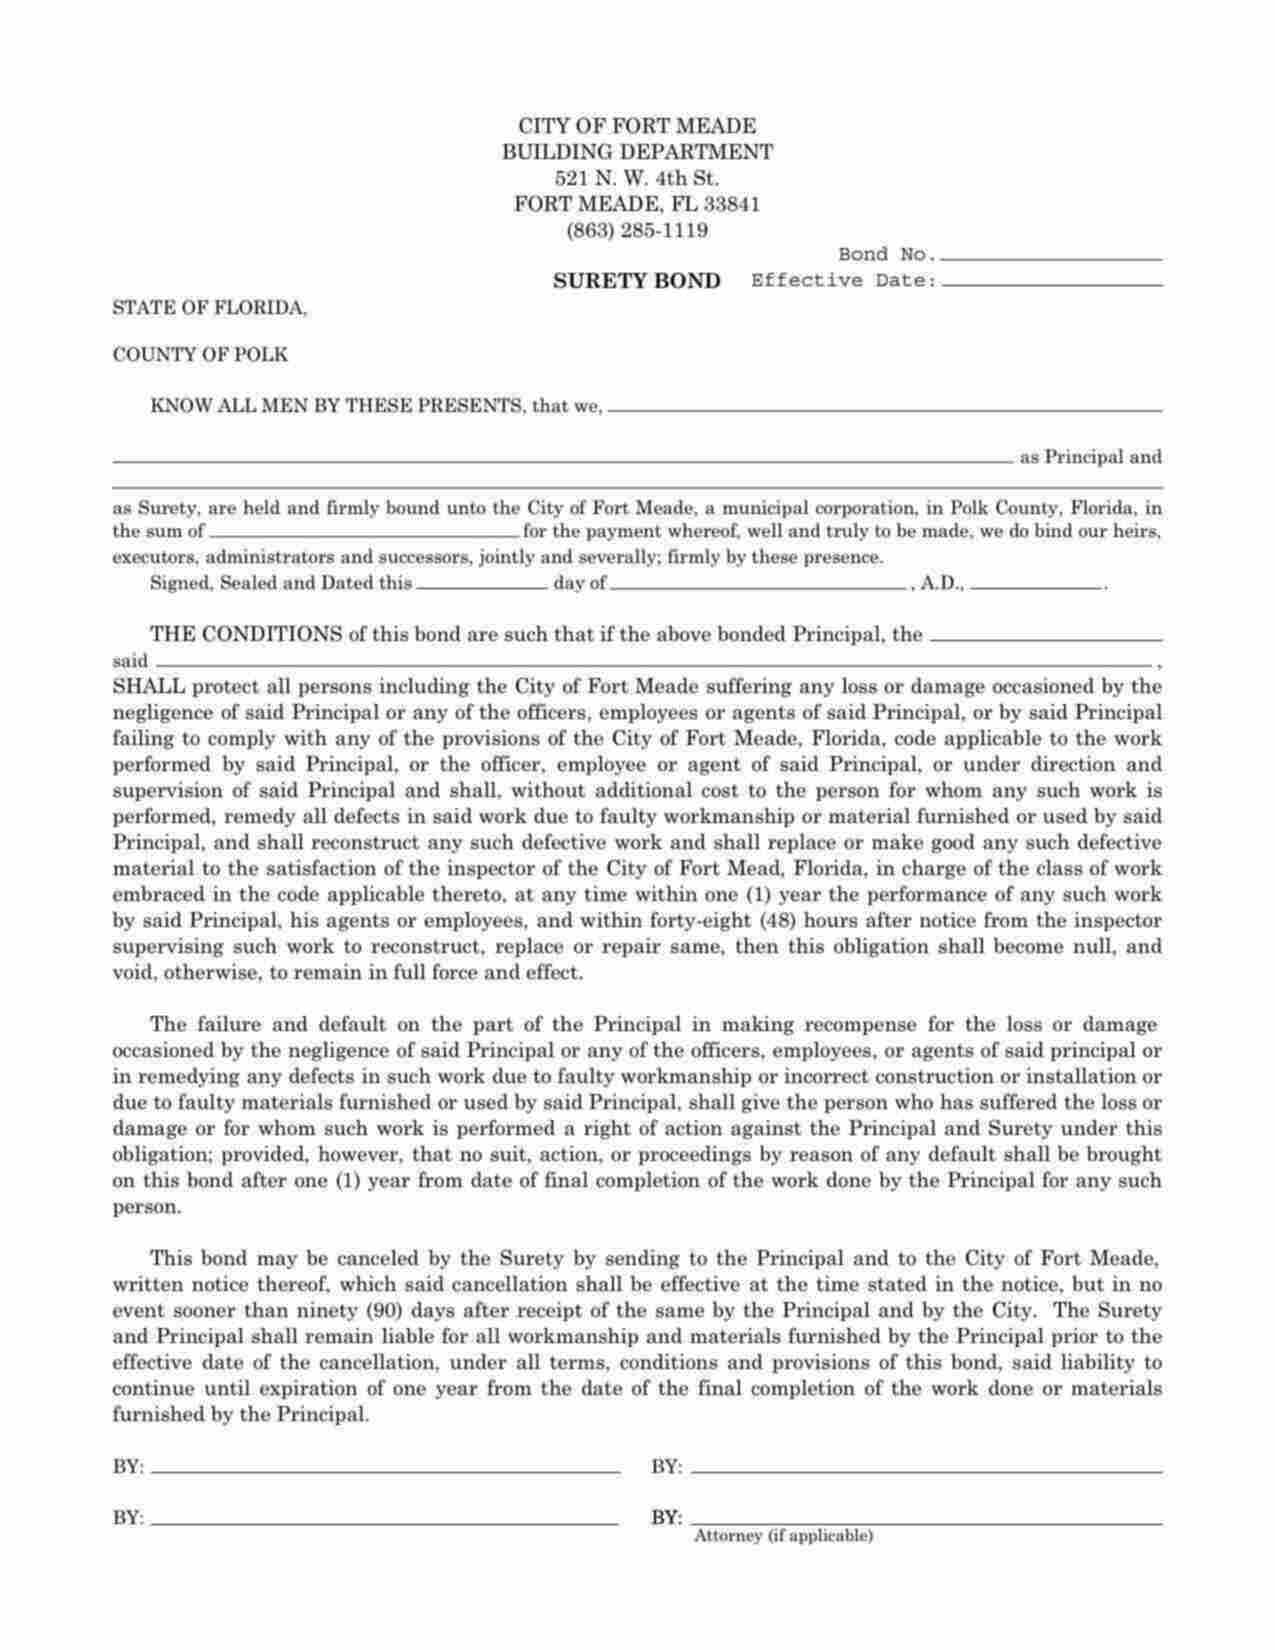 Florida Contractor's License/Permit Bond Form